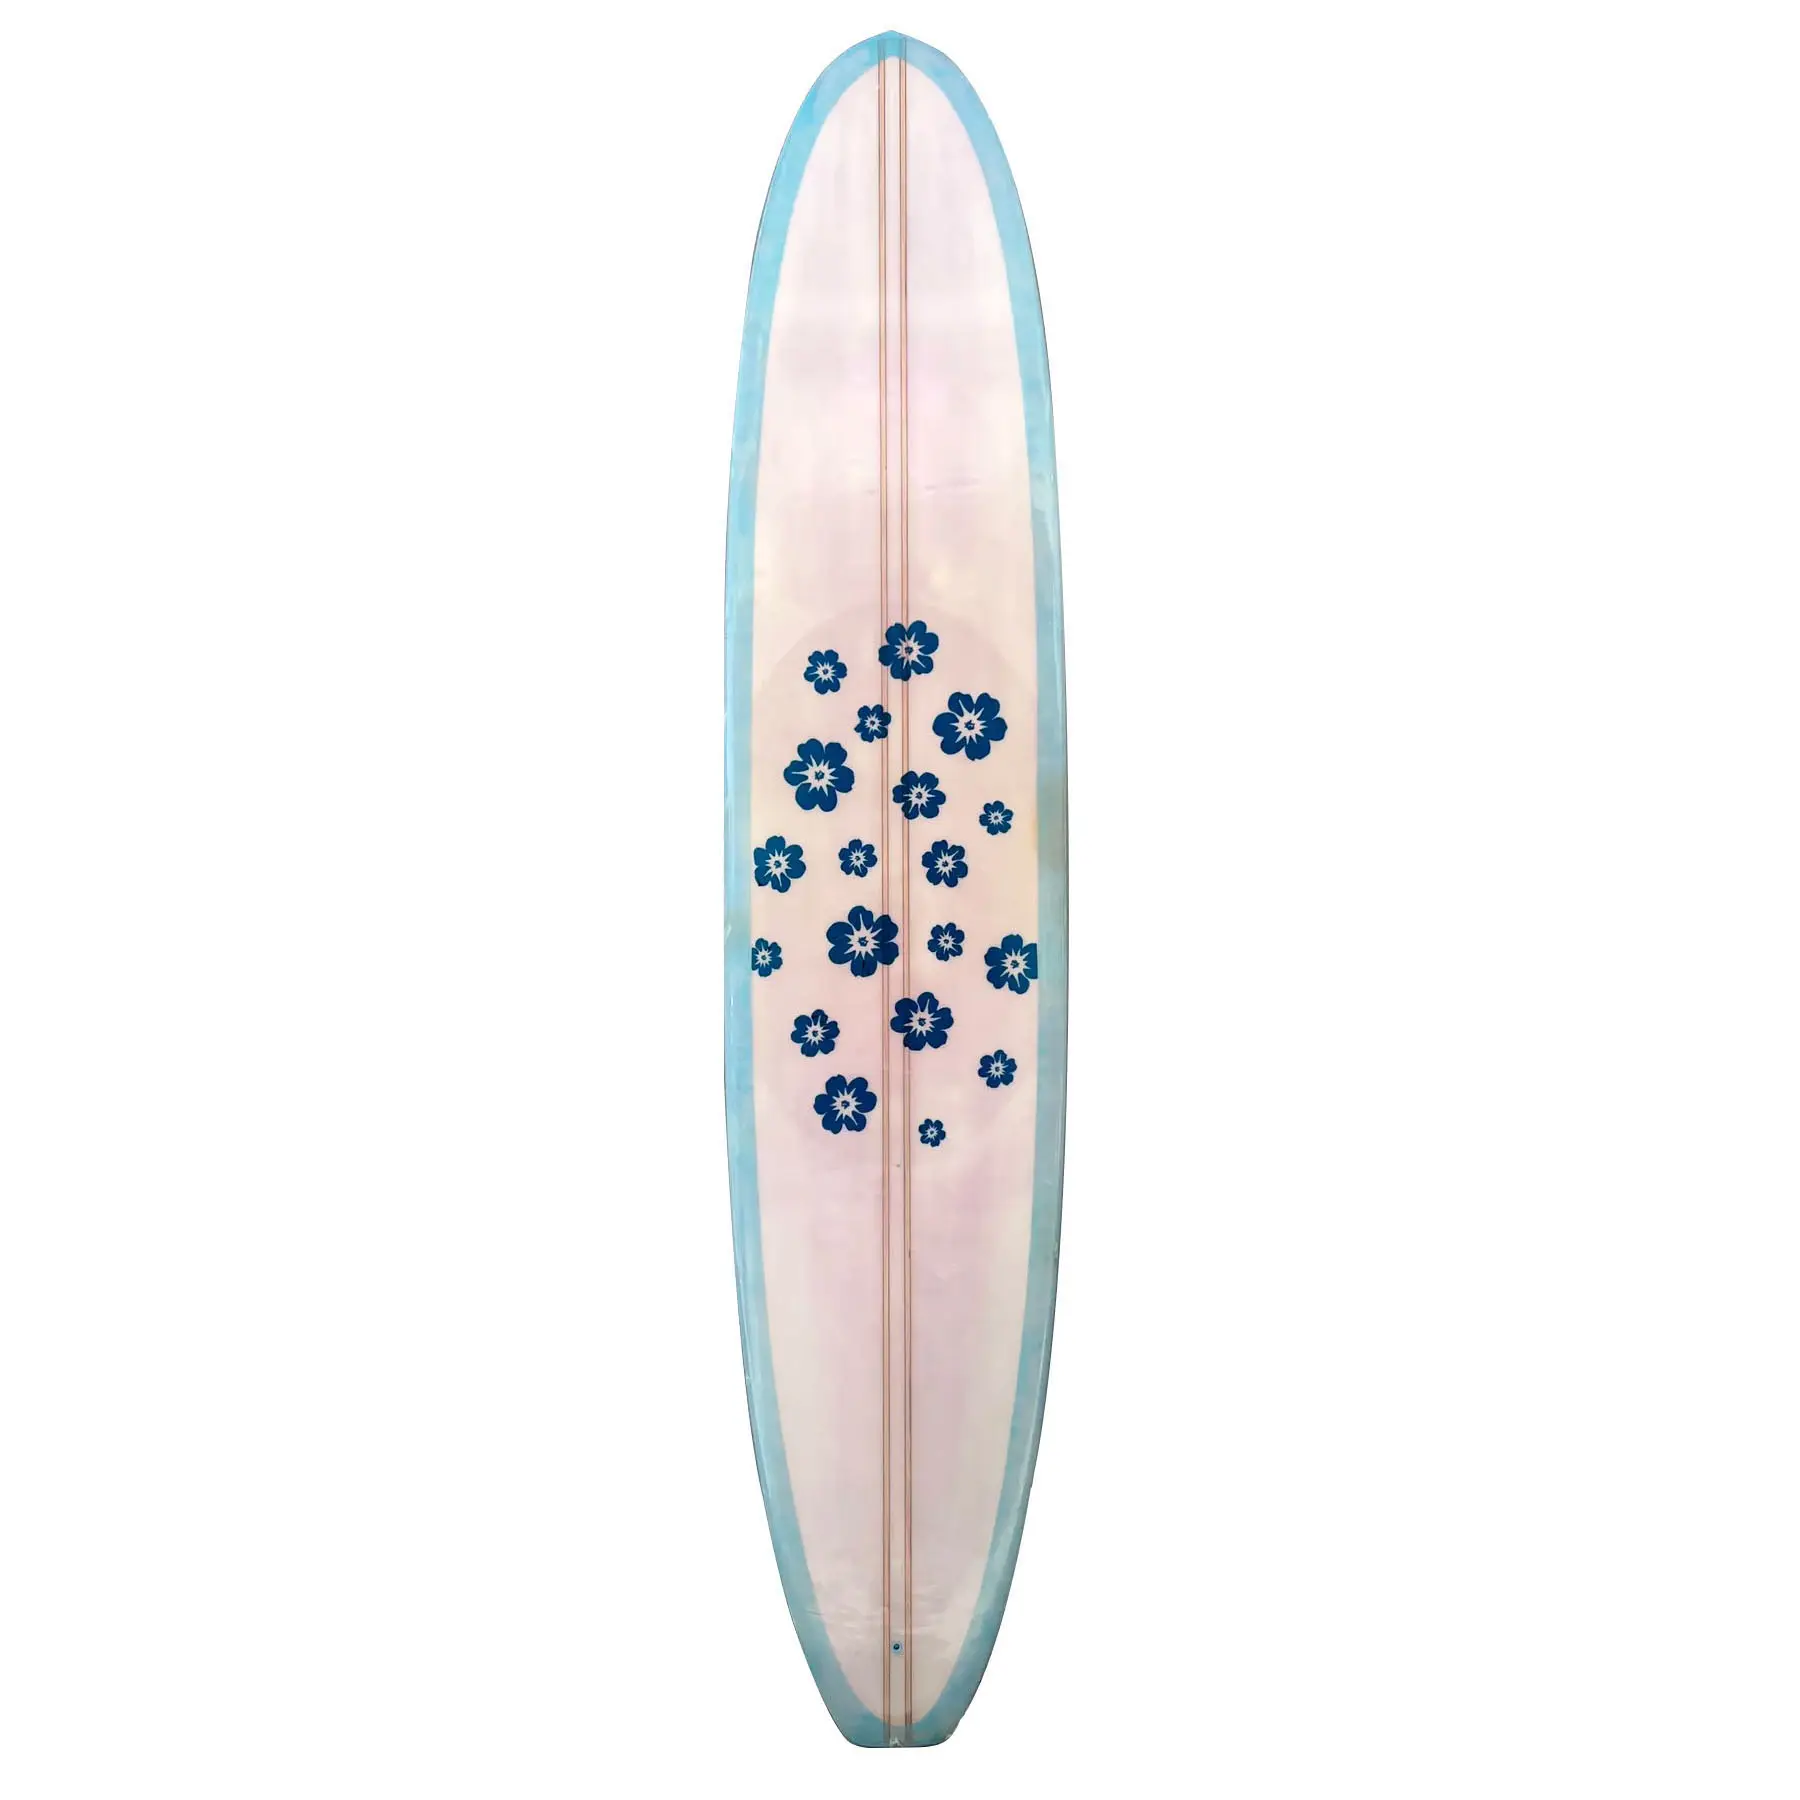 Penggunaan berselancar Exopy papan Surfboard sirip biru profesional pribadi gelombang Surfing Longboard